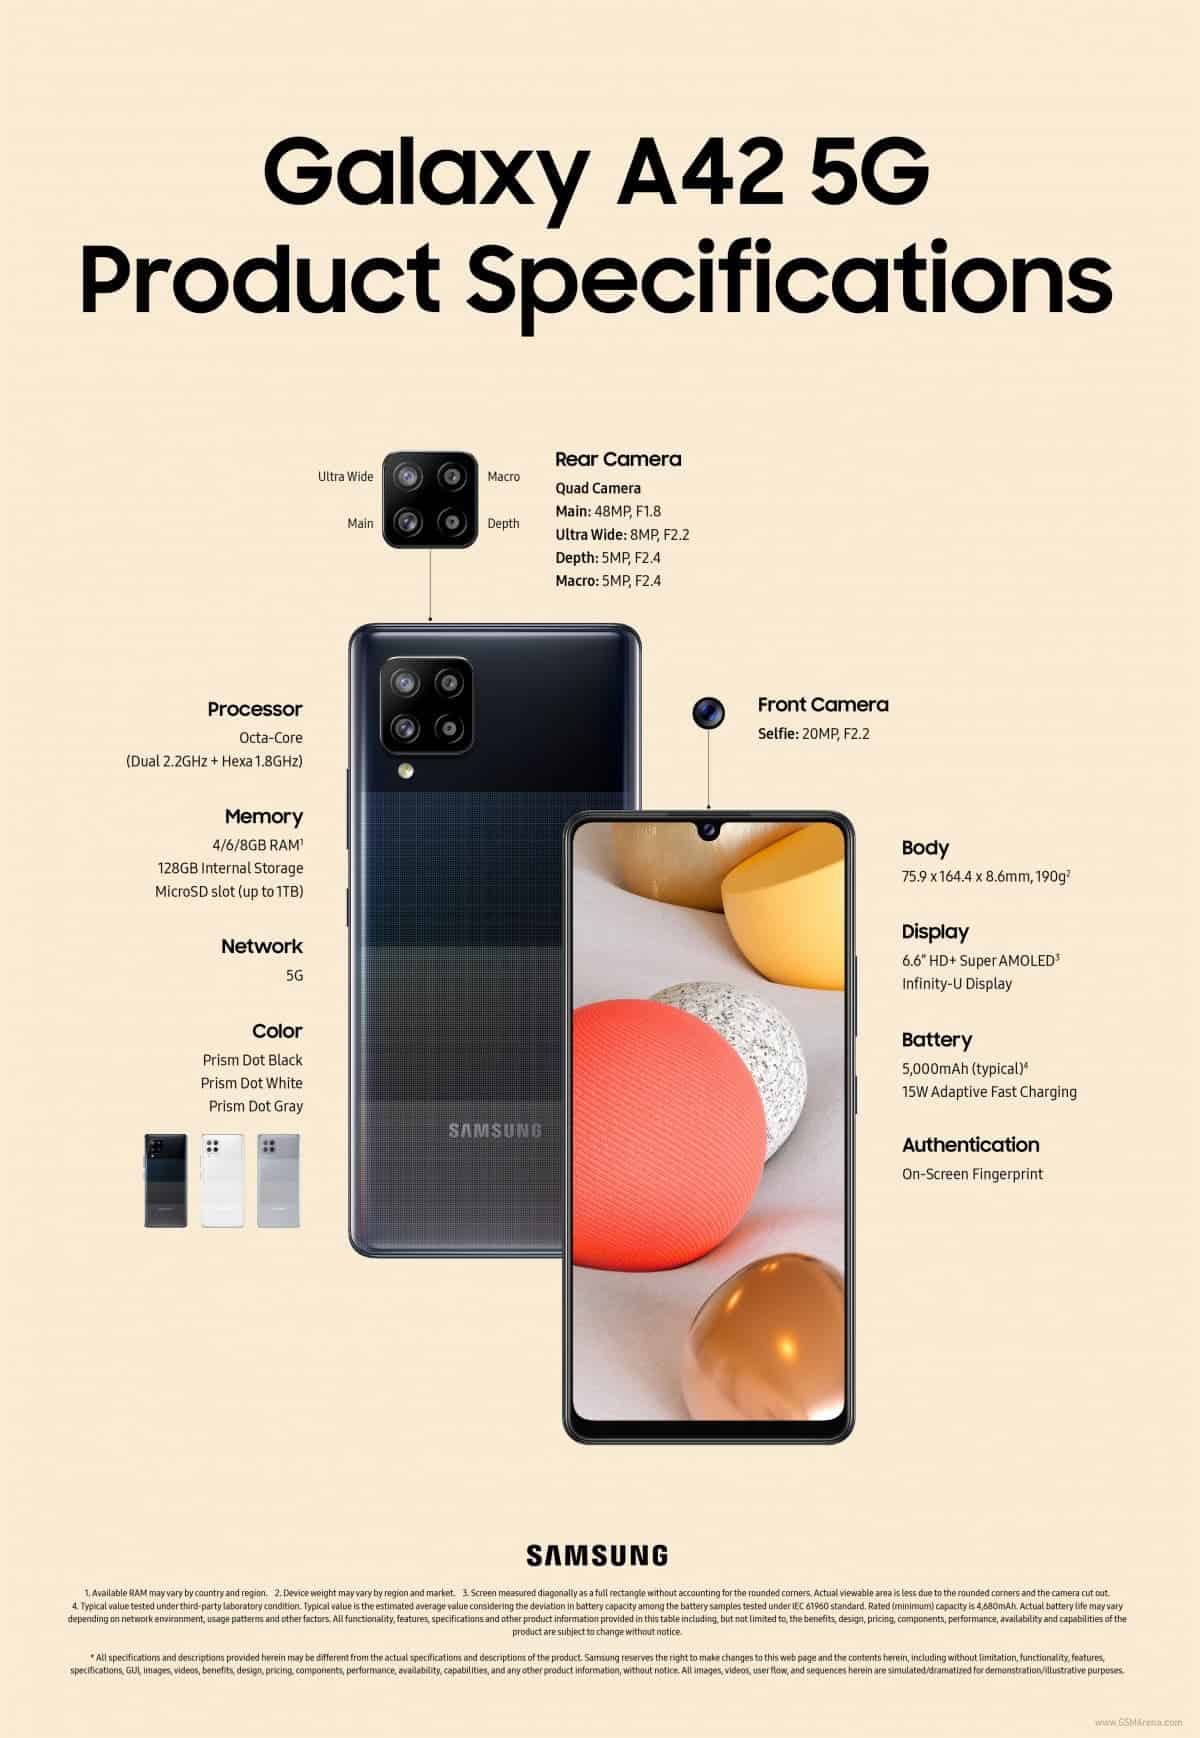 Samsung Galaxy A42 5G design